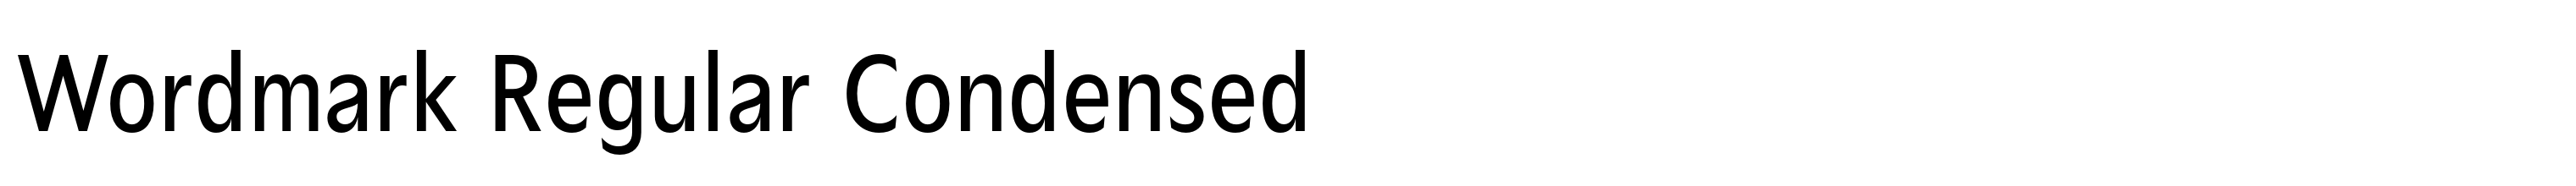 Wordmark Regular Condensed